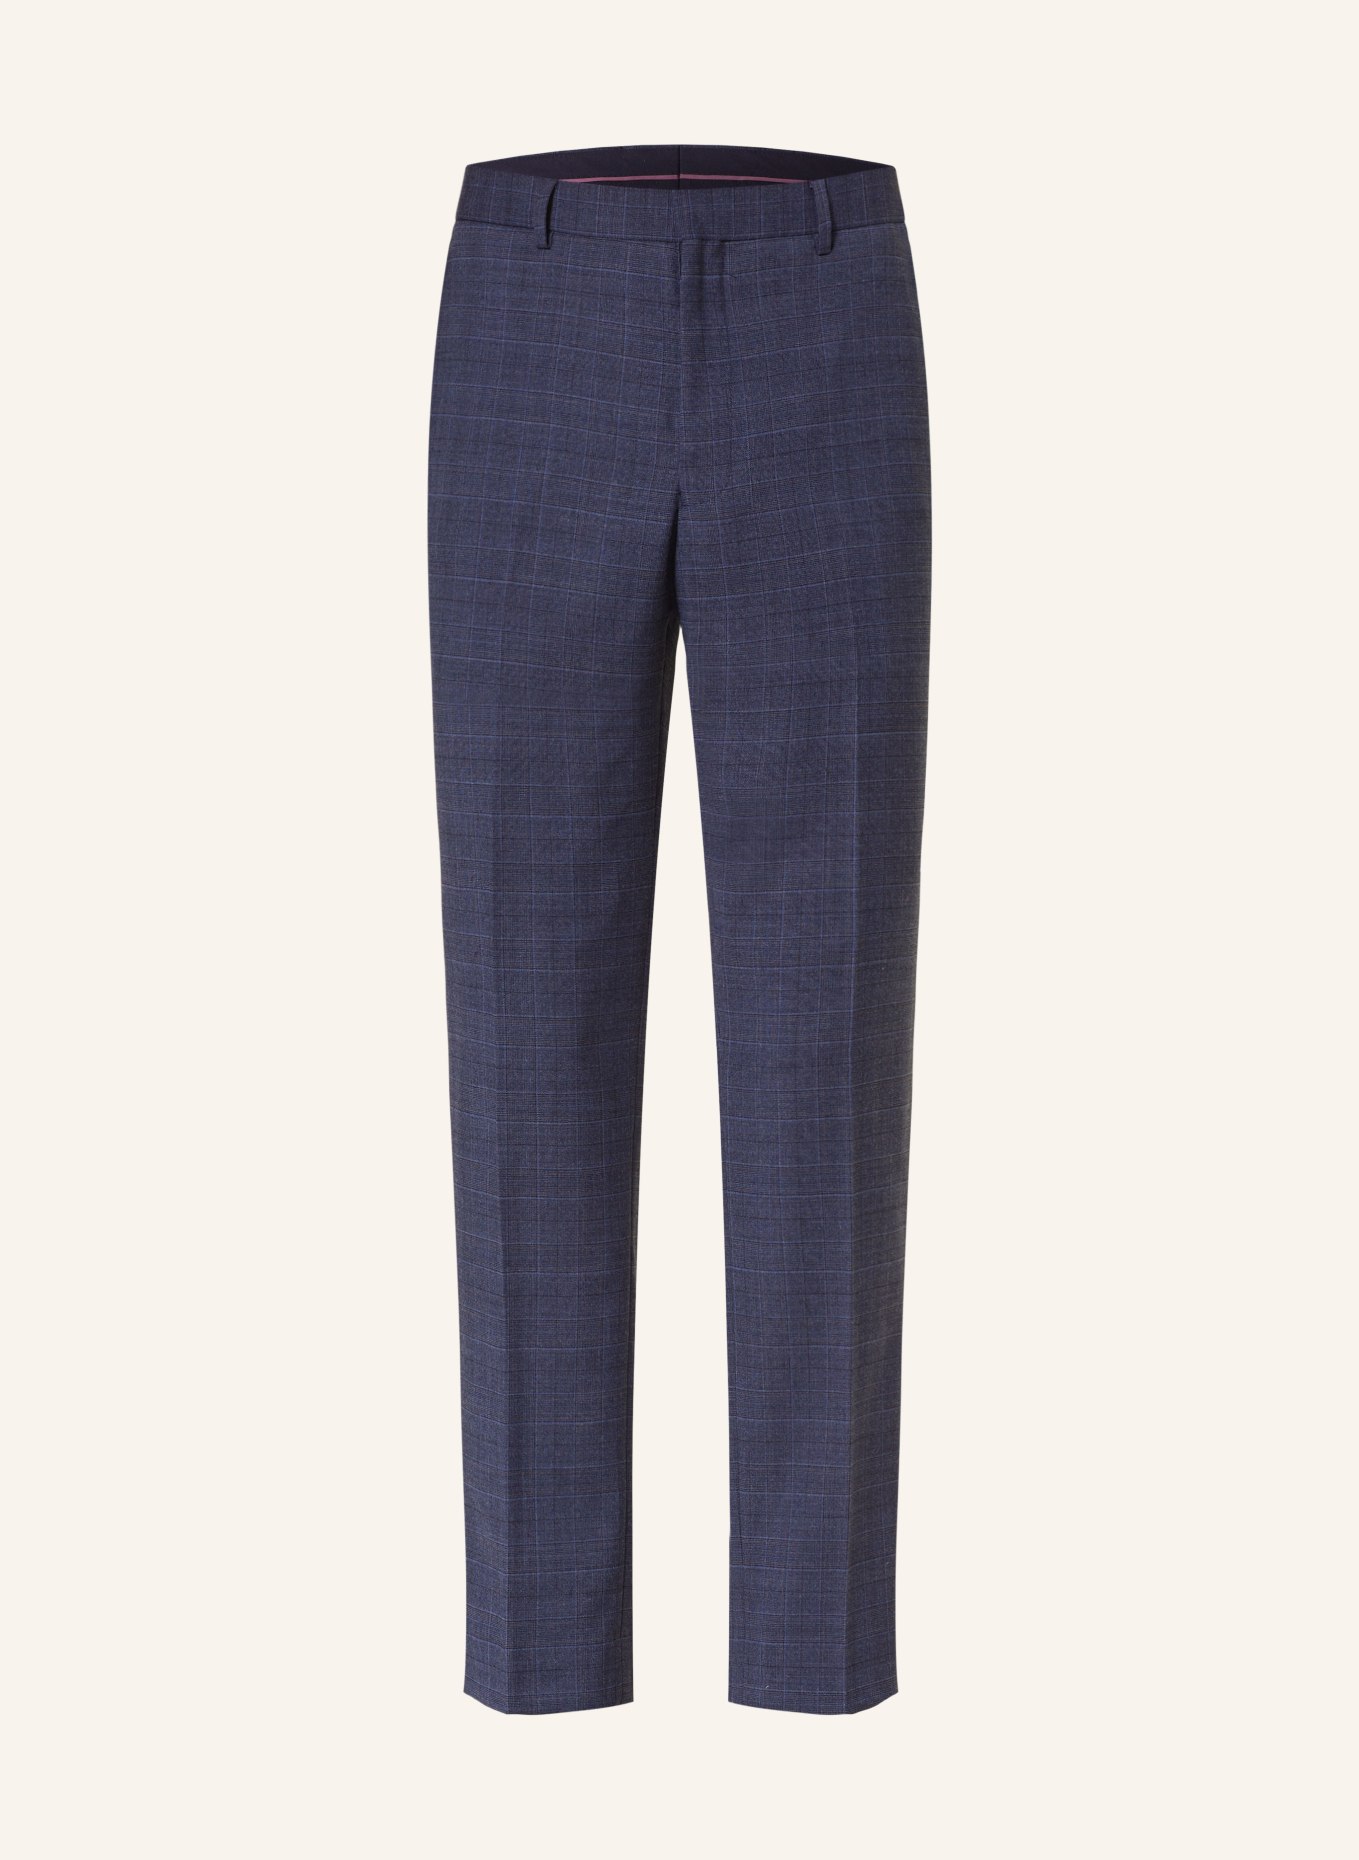 TED BAKER Anzughose CHELART Slim Fit, Farbe: NAVY NAVY (Bild 1)